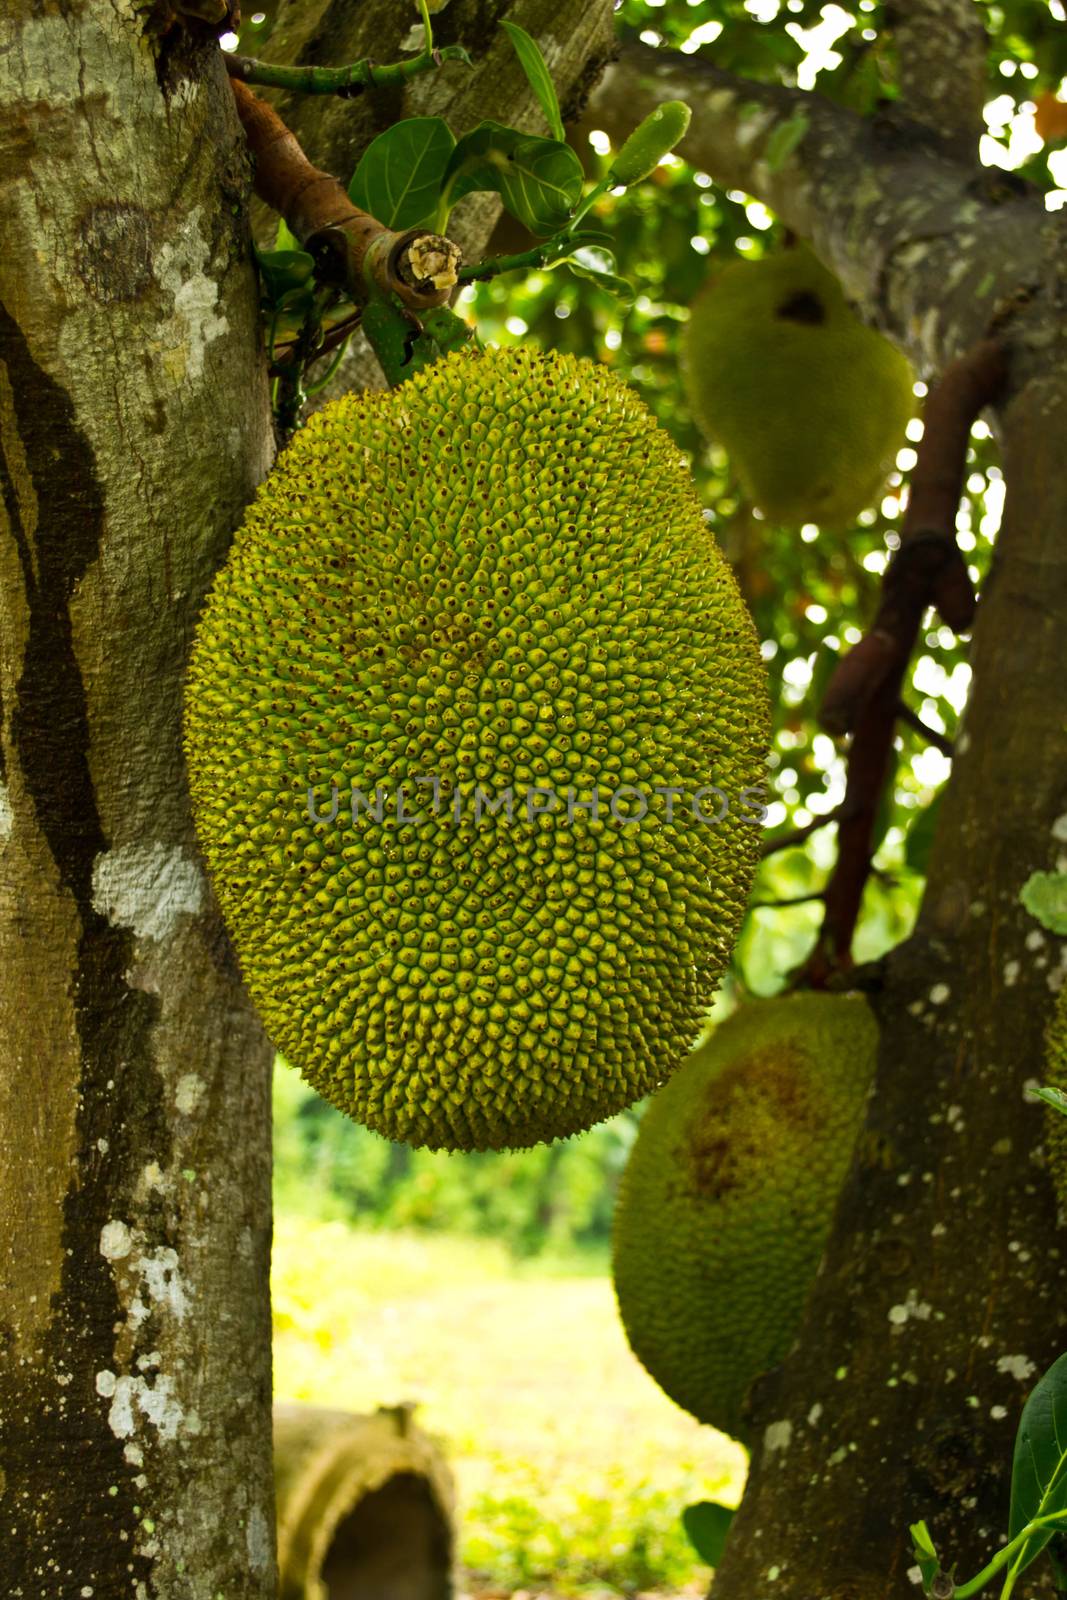 Jackfruit on the tree by Thanamat